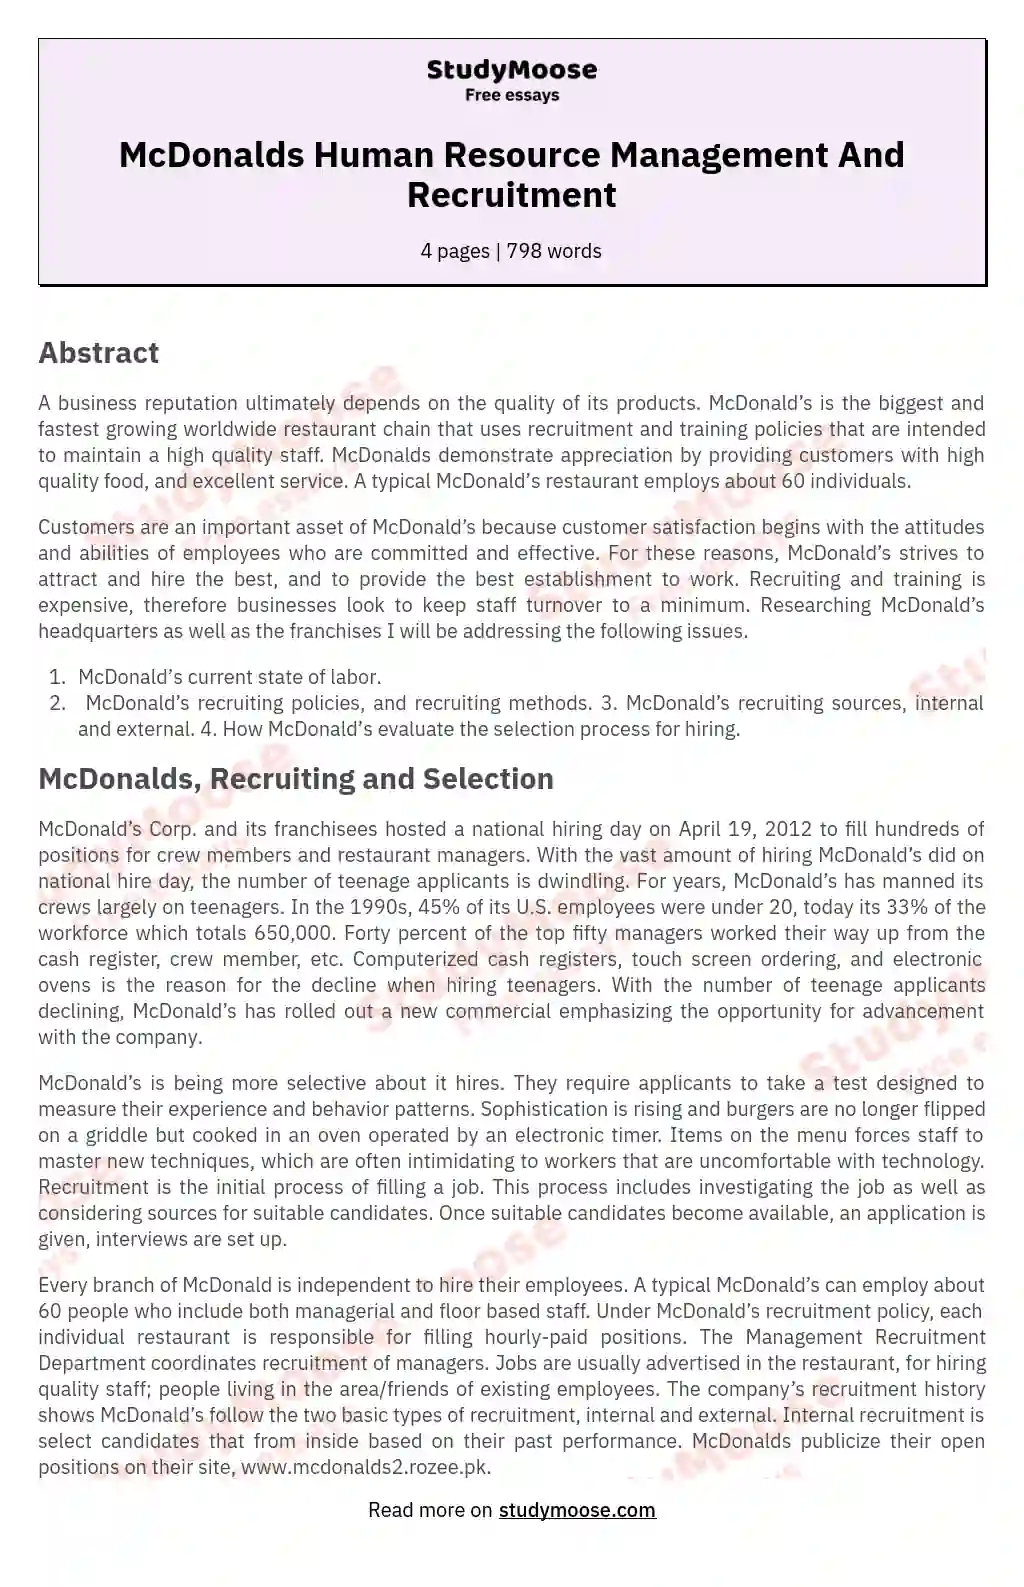 McDonald's Excellence: Workforce, Recruitment, Development essay